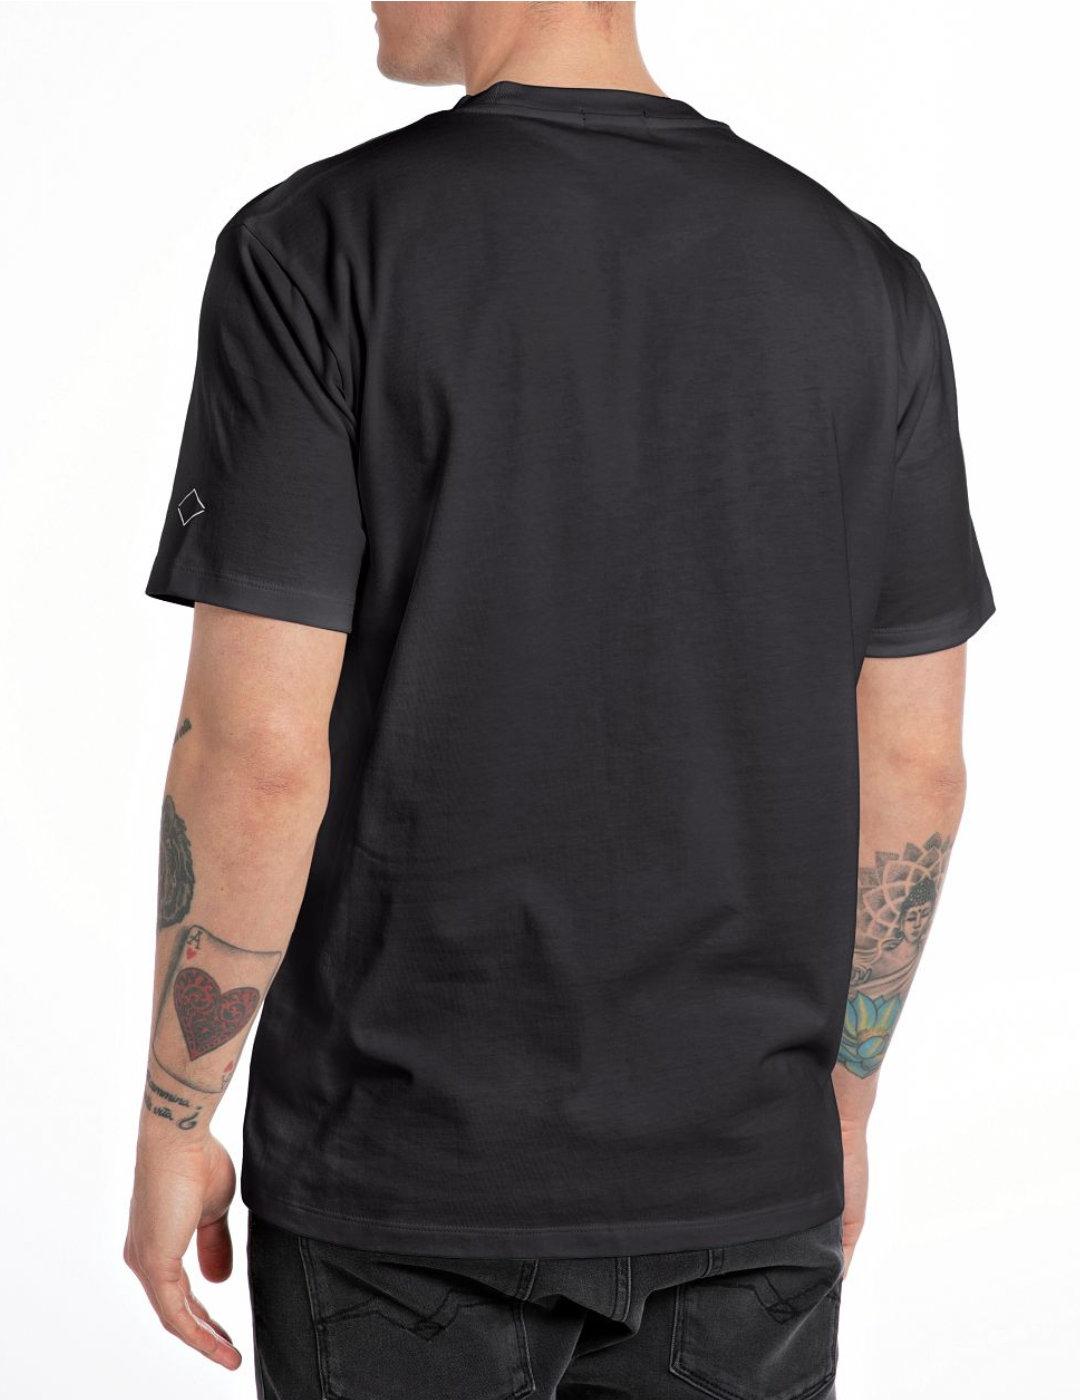 Camiseta Replay negro con perro manga corta para hombre